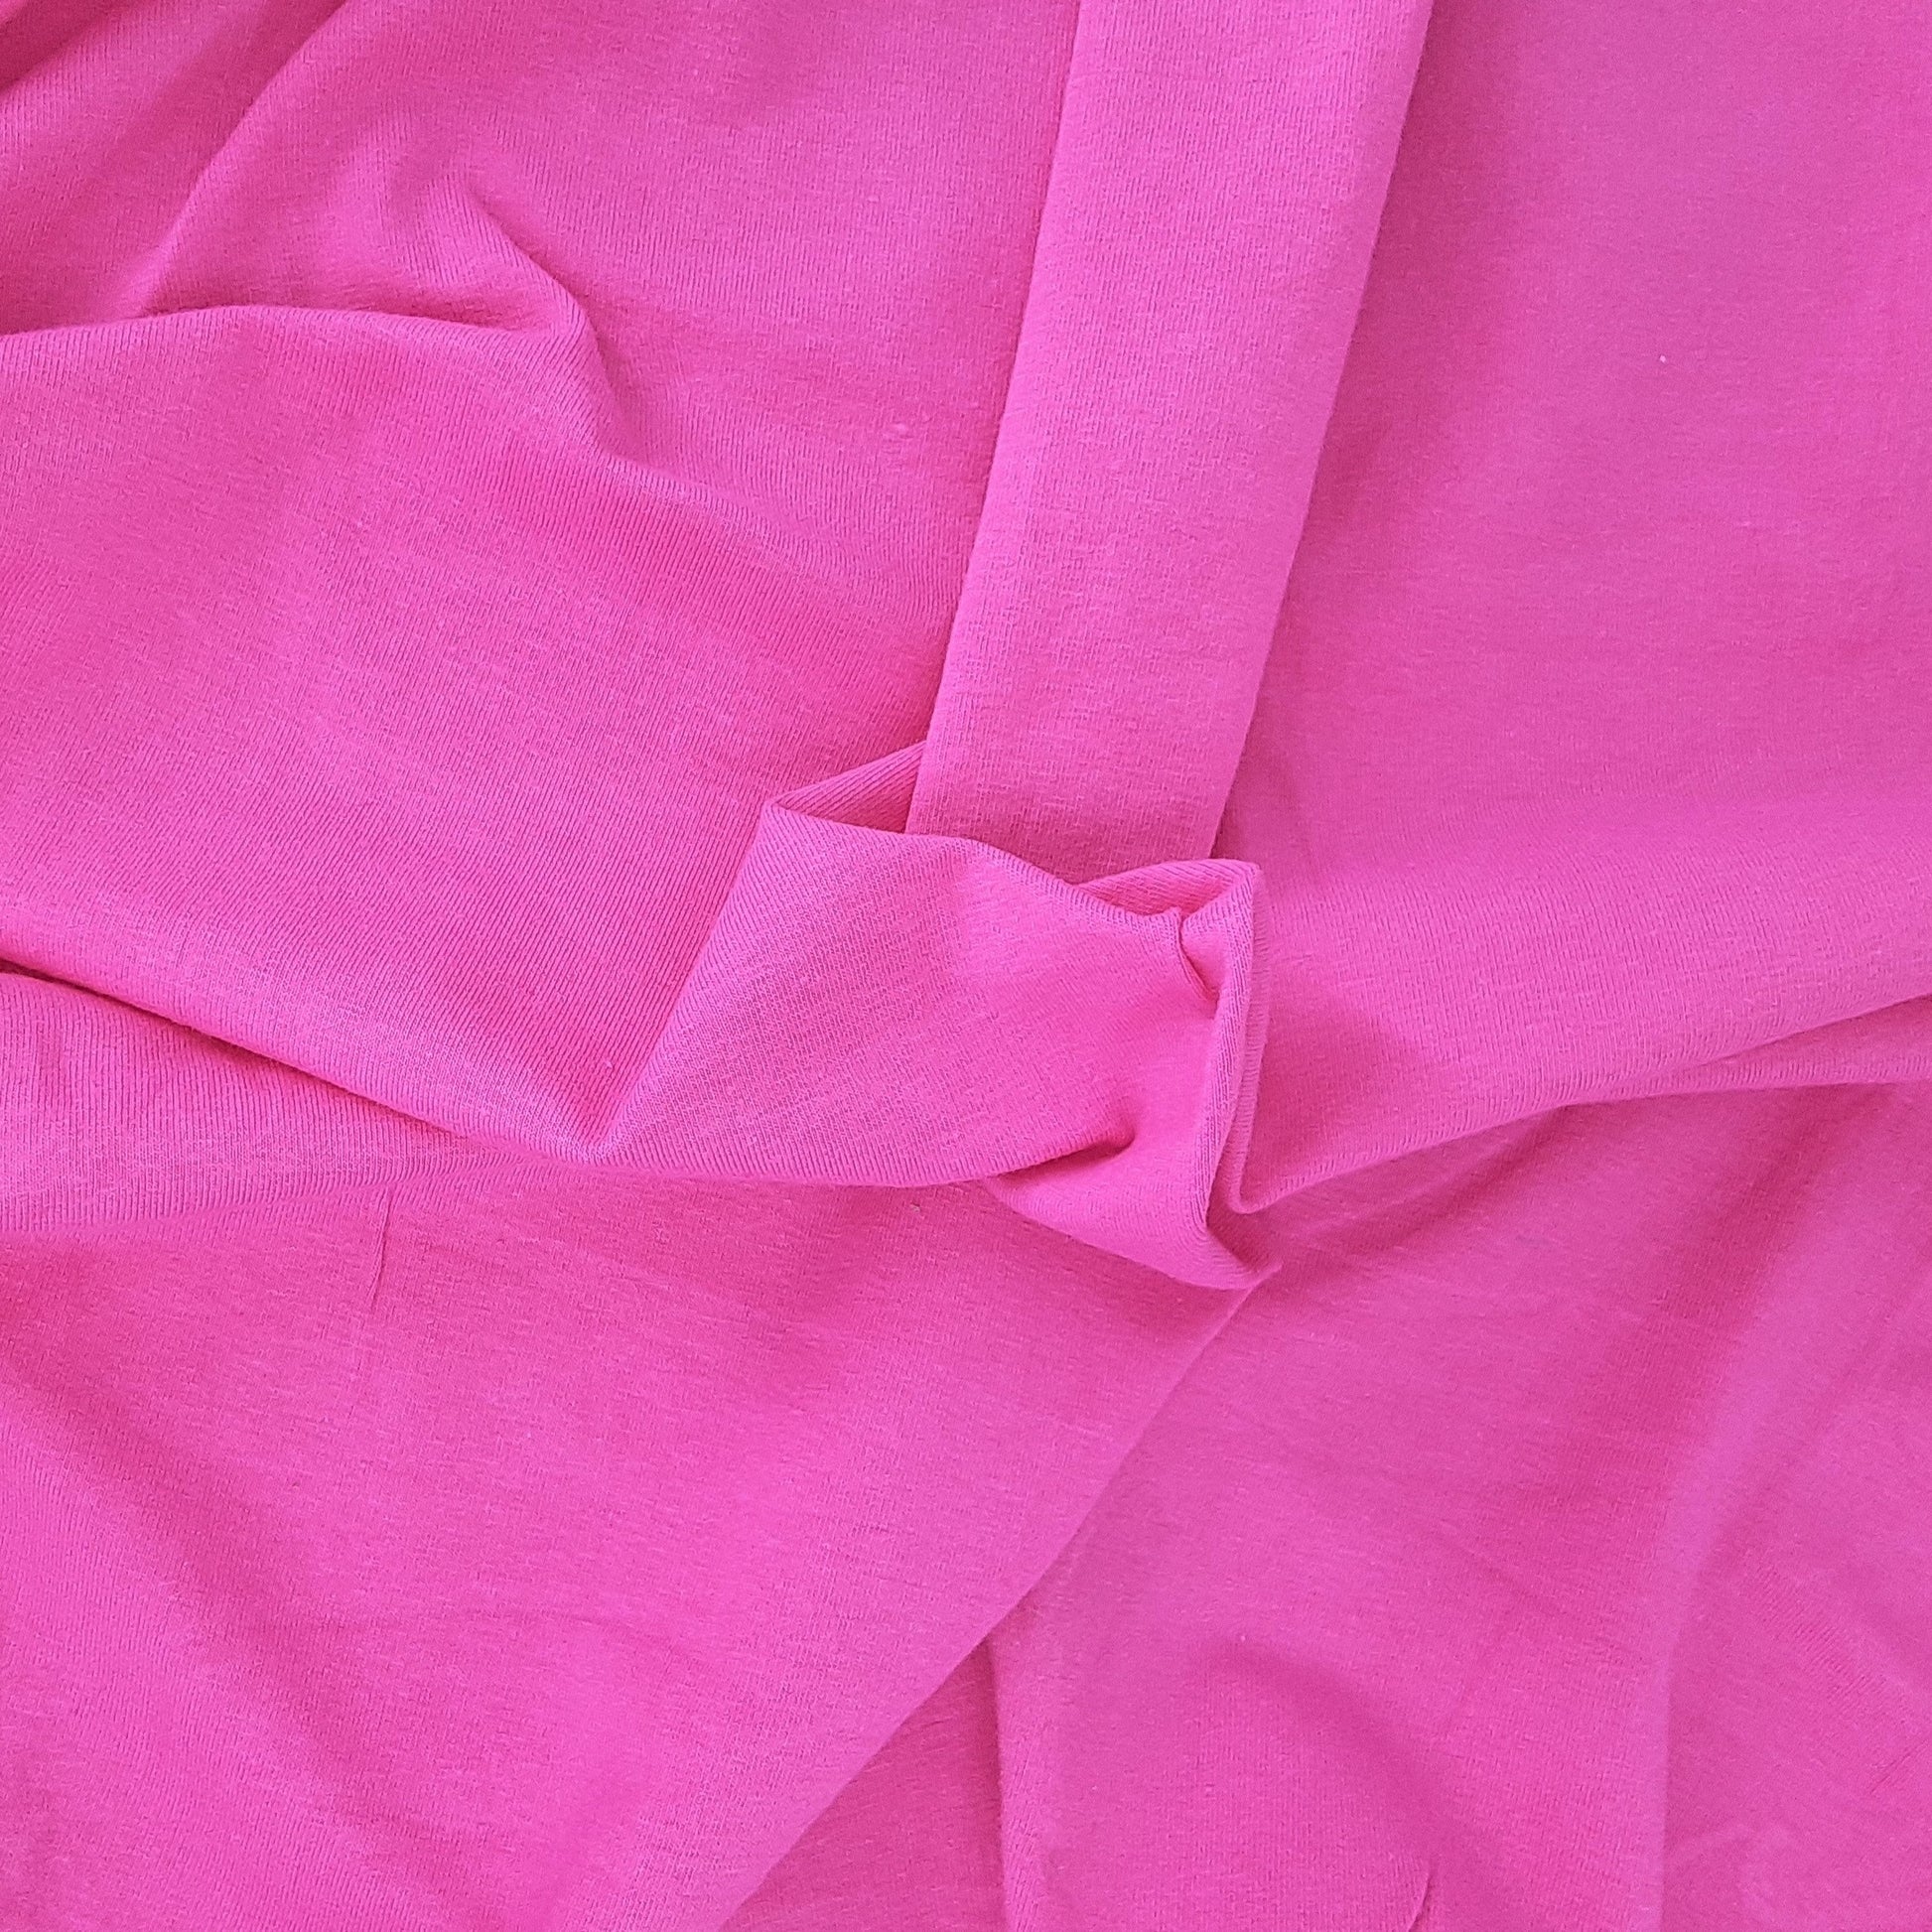 Hot Pink 10 Ounce Cotton/Spandex Jersey Knit Fabric - SKU 2853F 